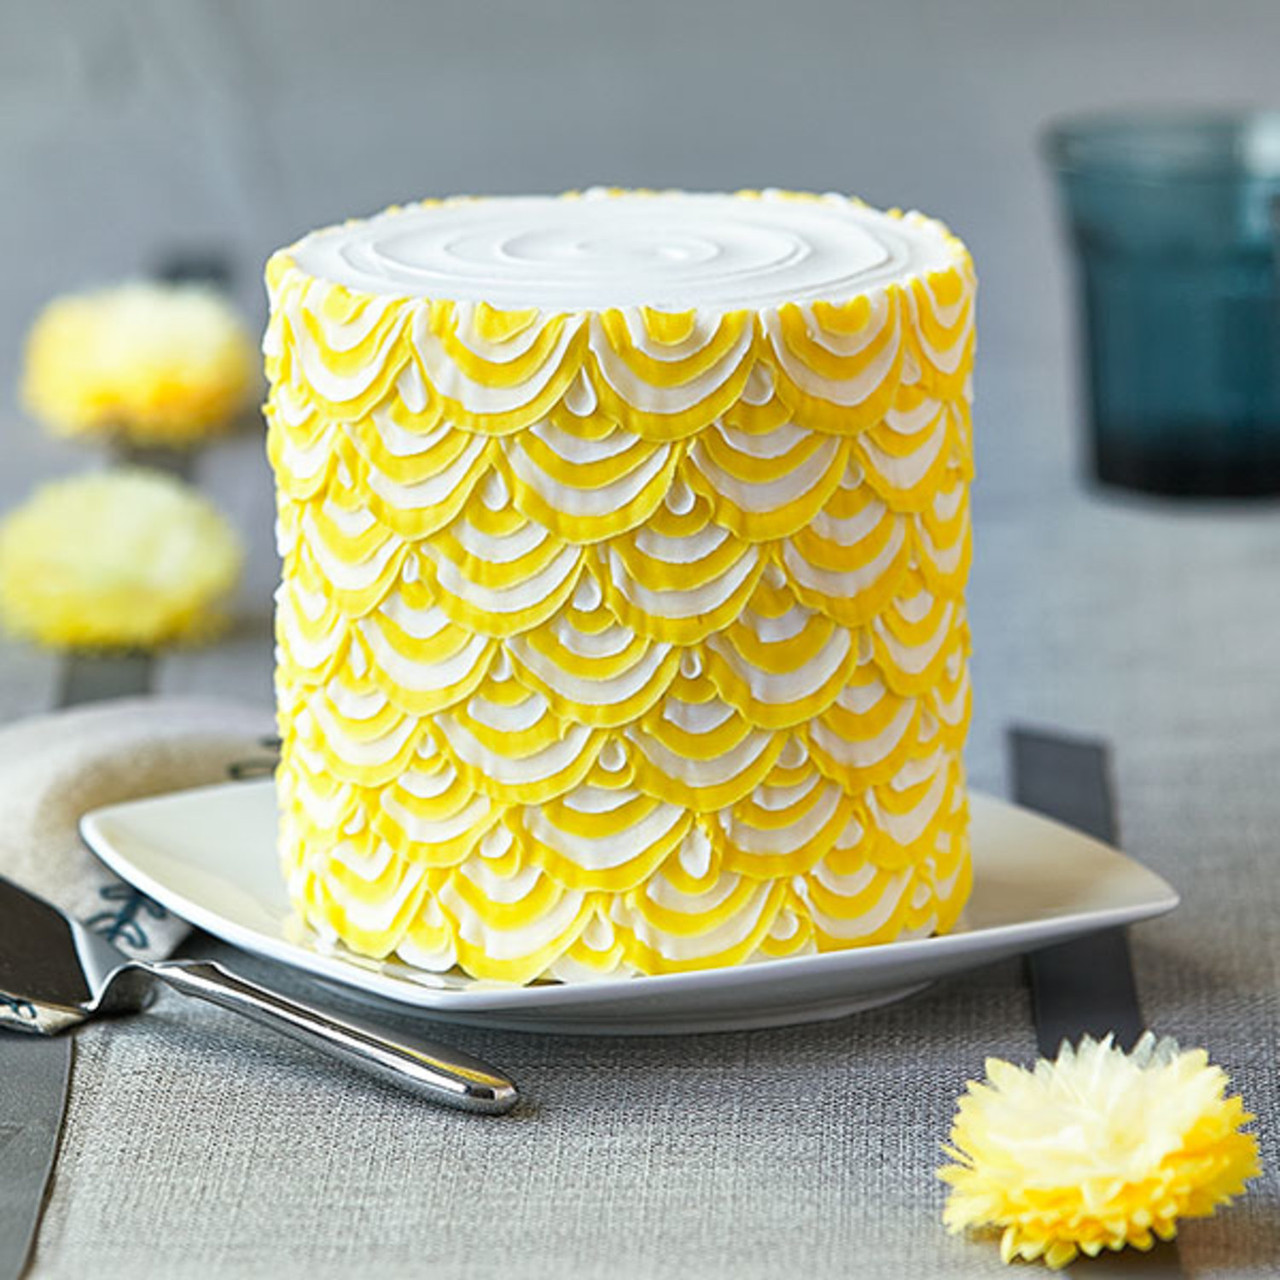 Easy Party Cake With Yellow Scallops - Wilton